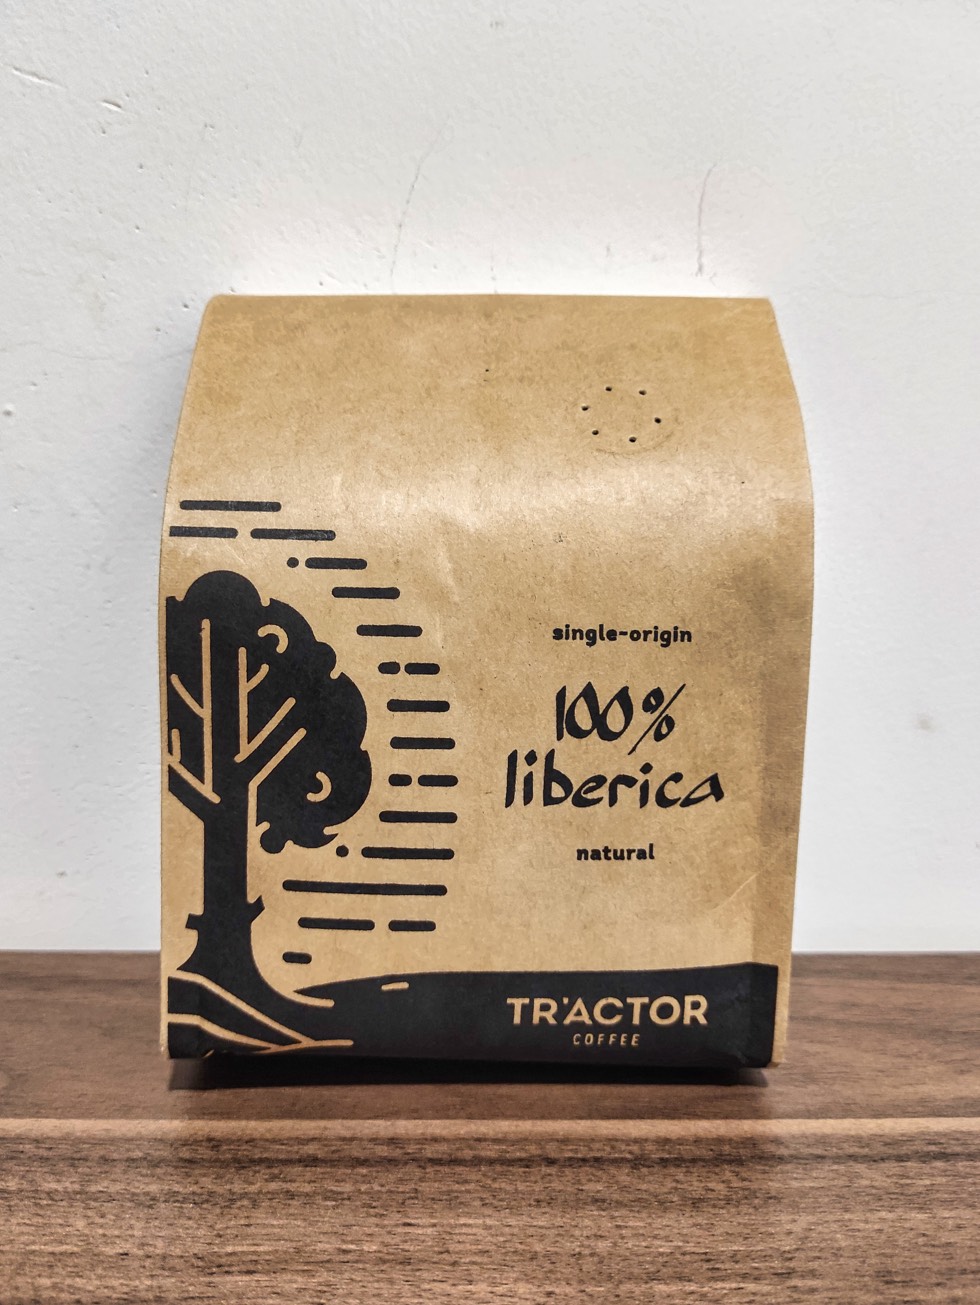 Tractor Coffee 100% Liberica